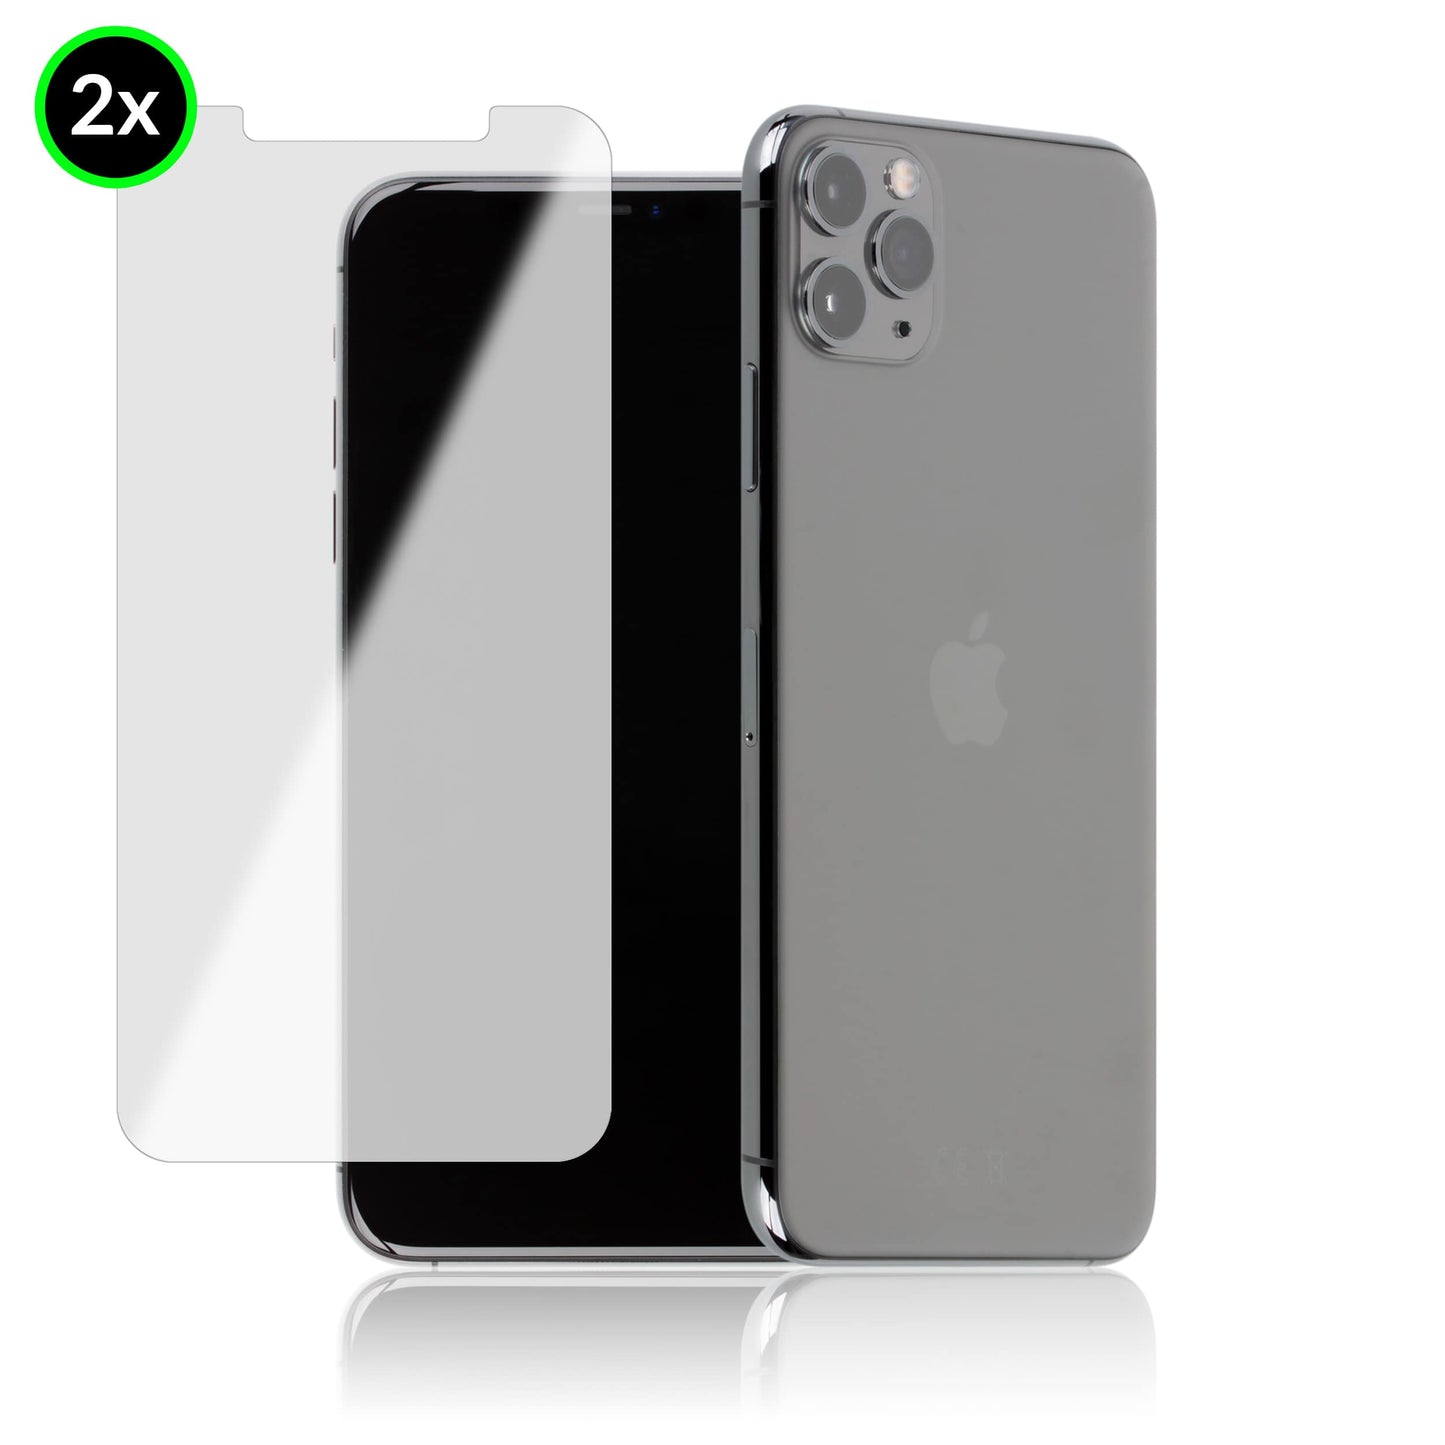 iPhone 11 Pro Max - sapphire glass